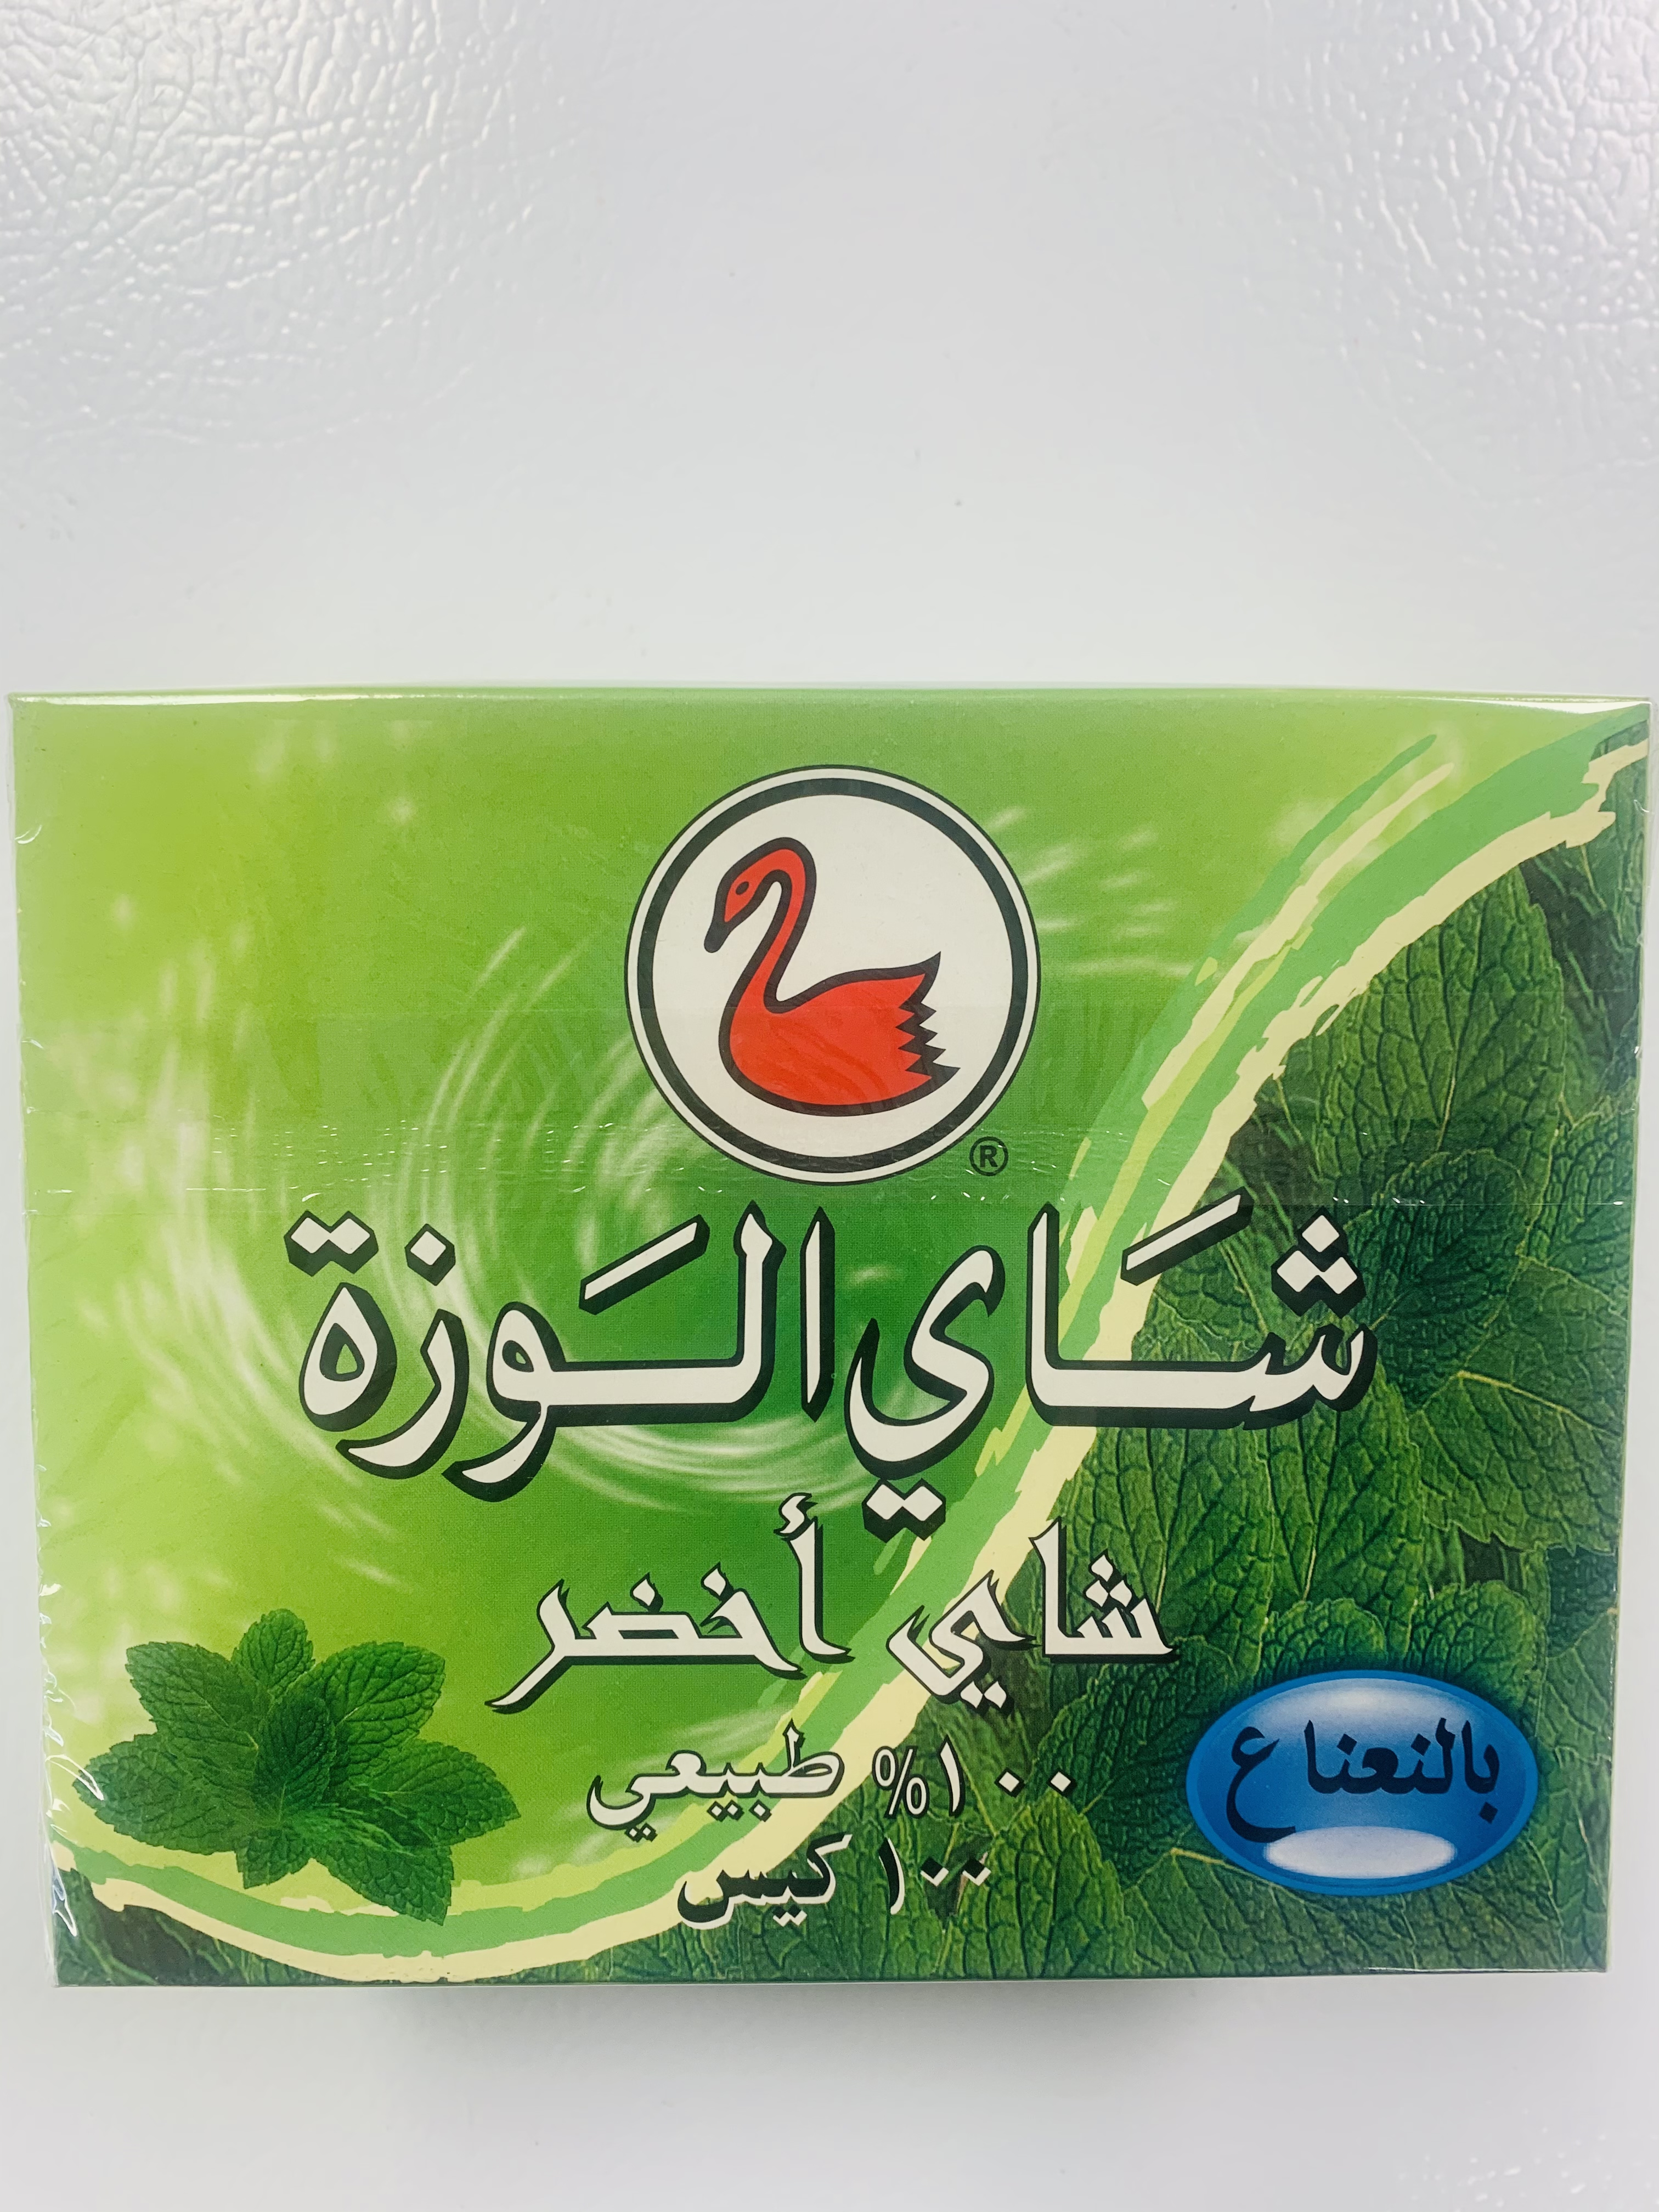 Alwazah Green Tea <br>5.99$